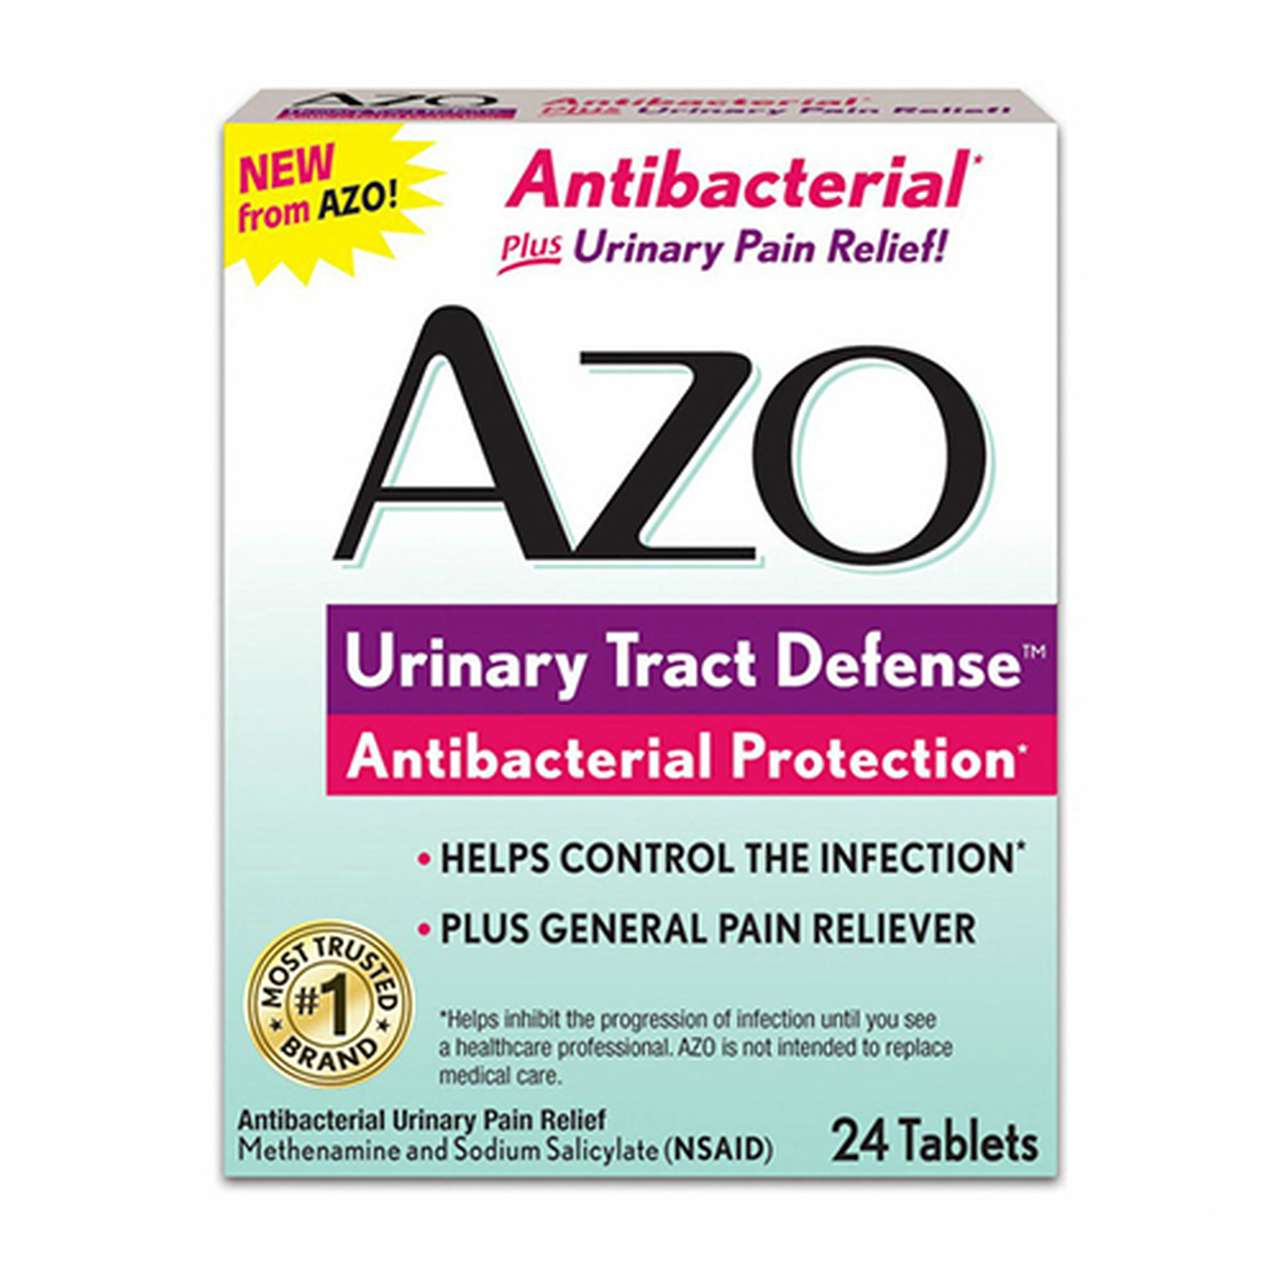 Azo Urinary Tract Defense Antibacterial Protection Tablets ...